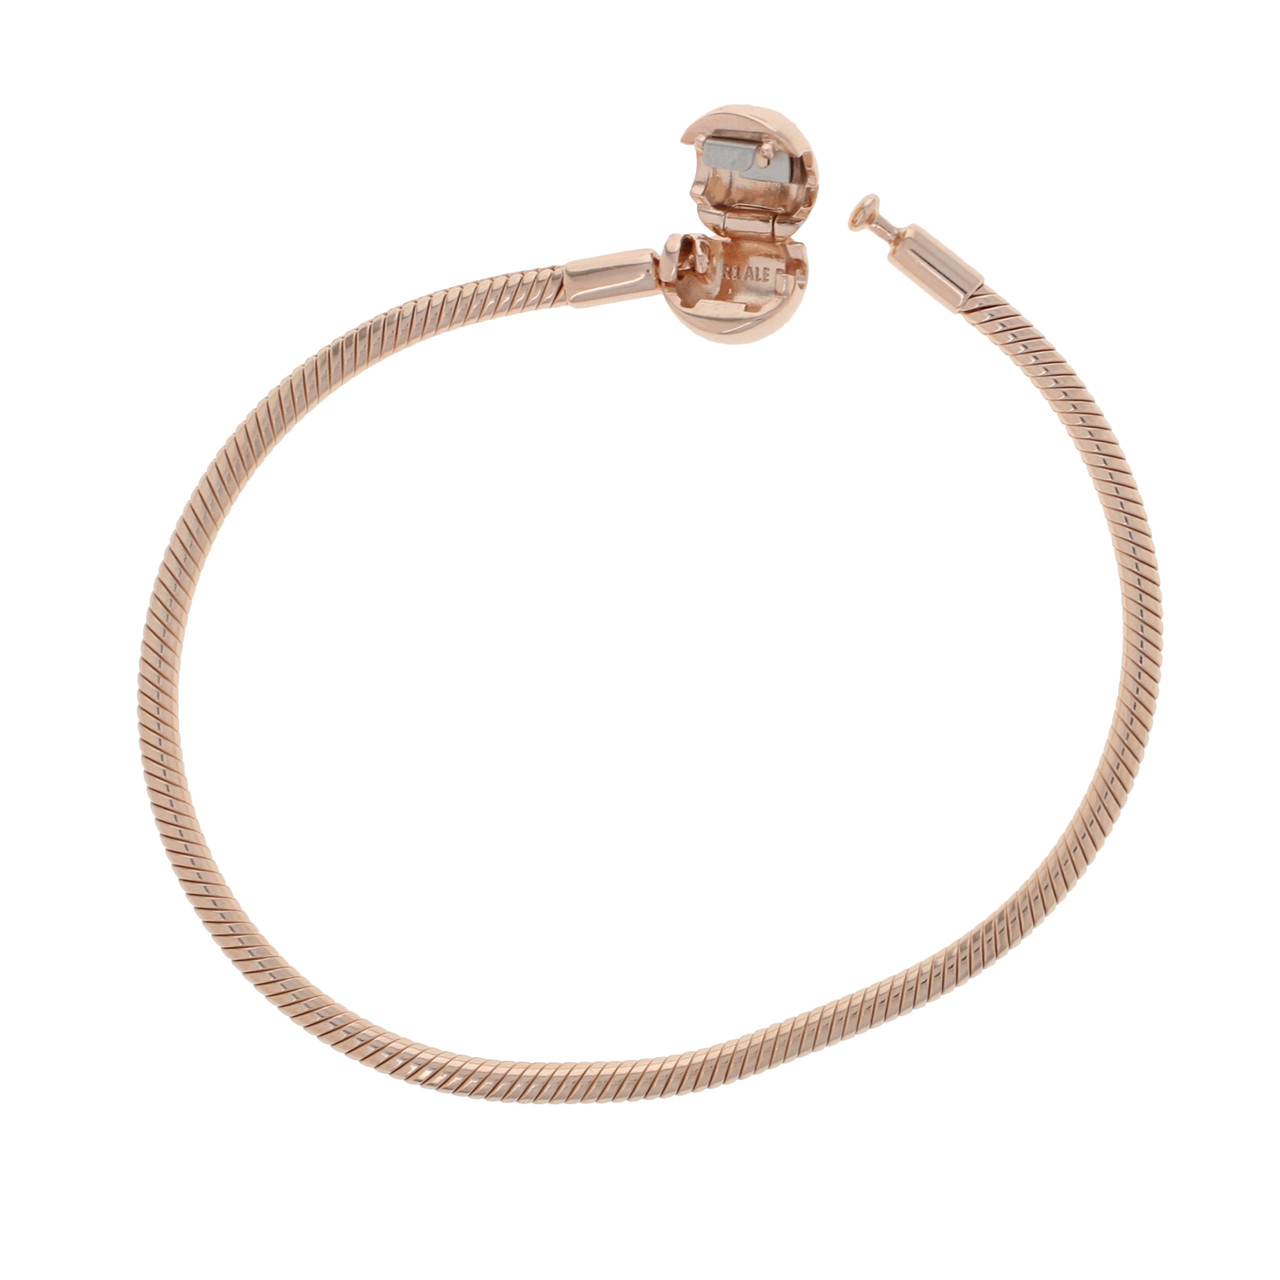 PANDORA Bracelet, T-Bar Toggle Clasp - 18 cm / 7.1 in - American Jewelry